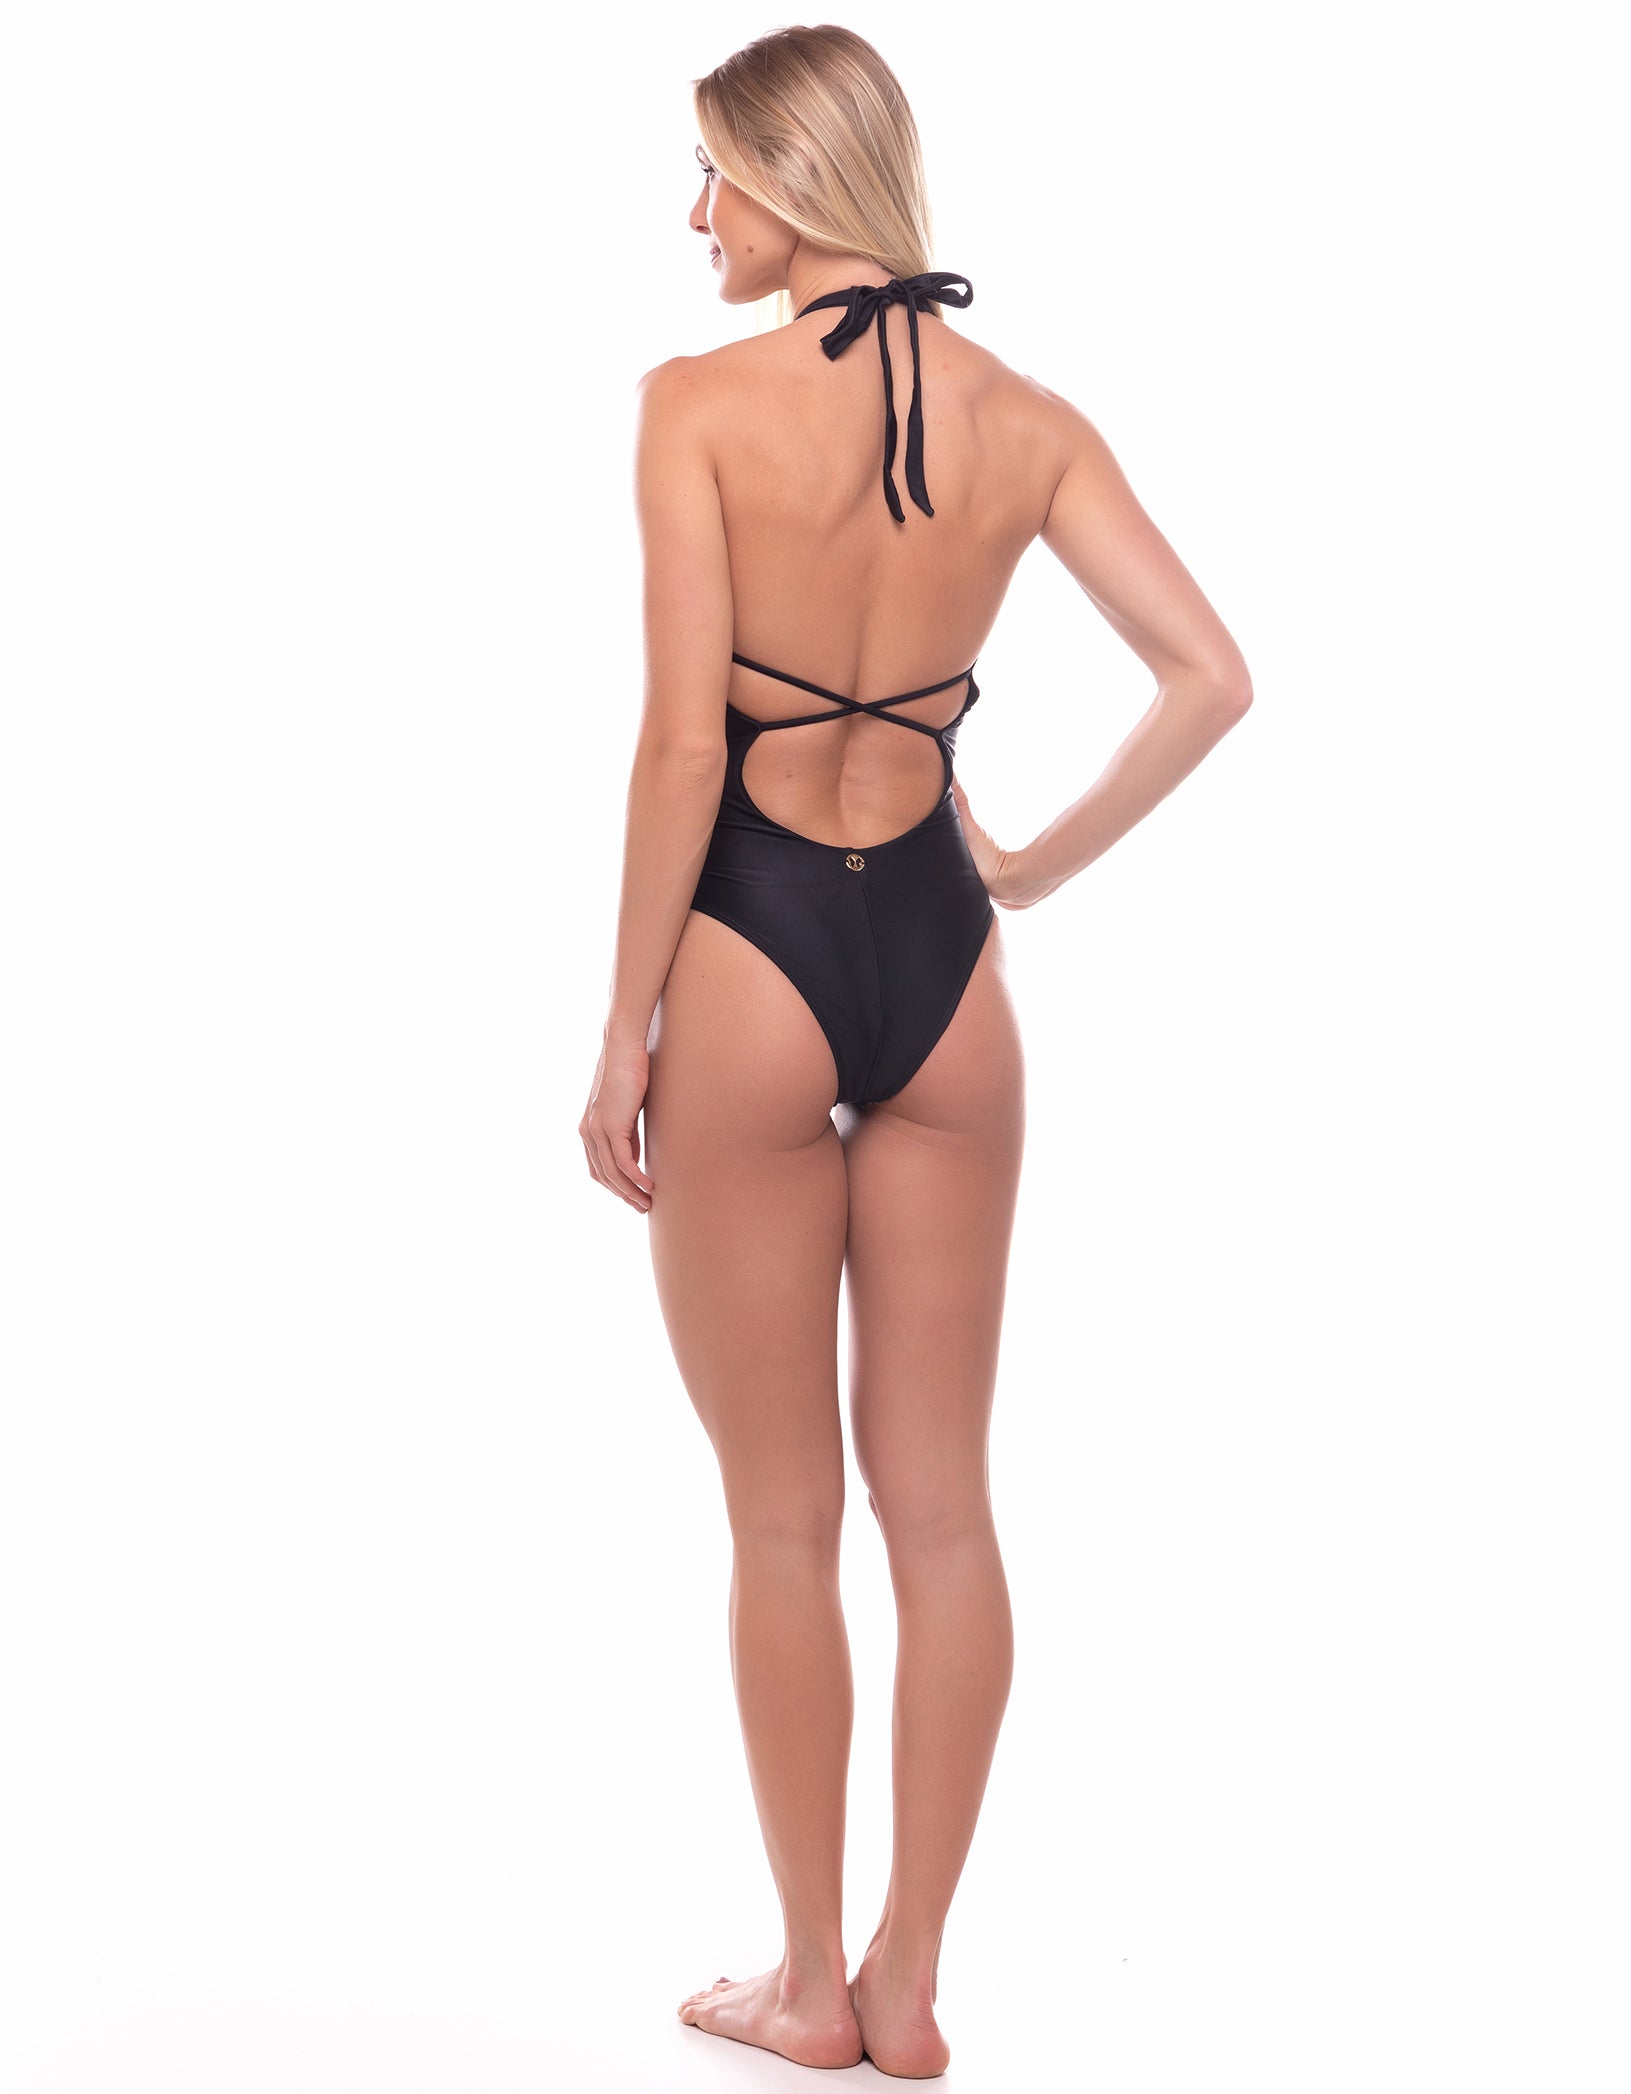 Vestem - Swimsuit Juliah Black Onix - MA101.C0002